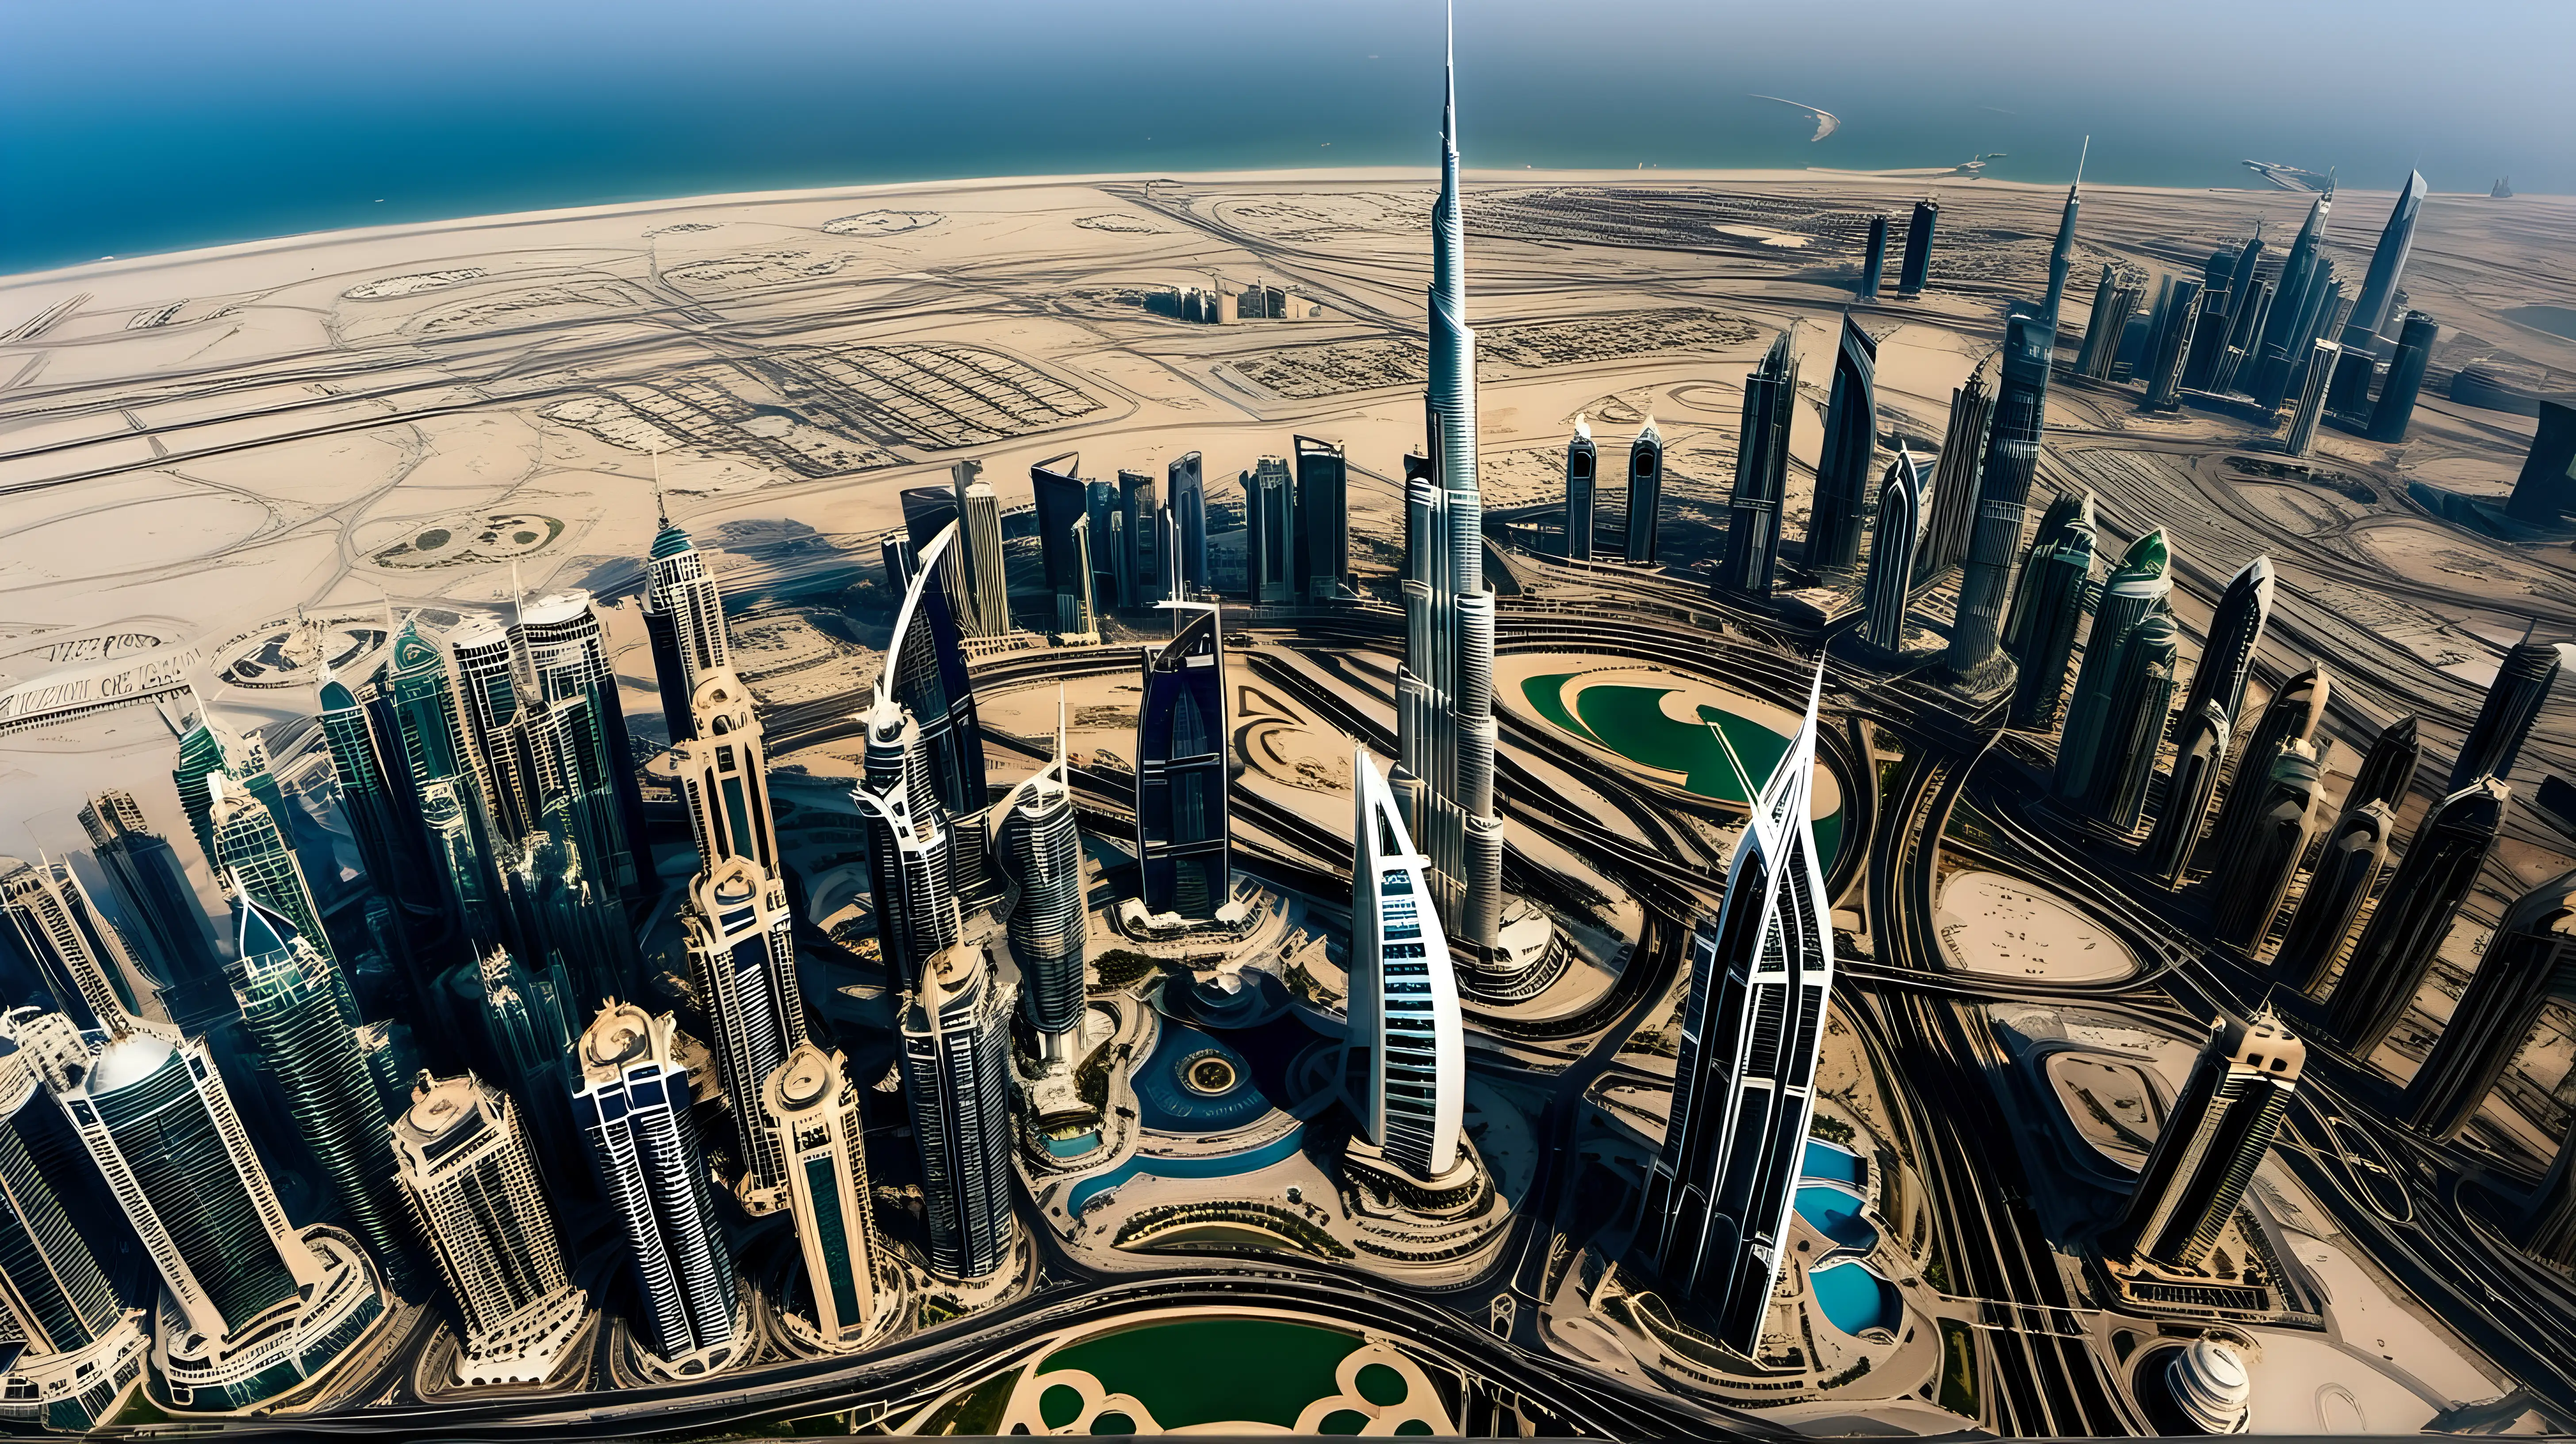 show Burj Khalifa (Dubai, UAE) at its best shape and show its beauty roylaty and greatness,a wide angle image showing Burj Khalifa (Dubai, UAE) at its peak beauty